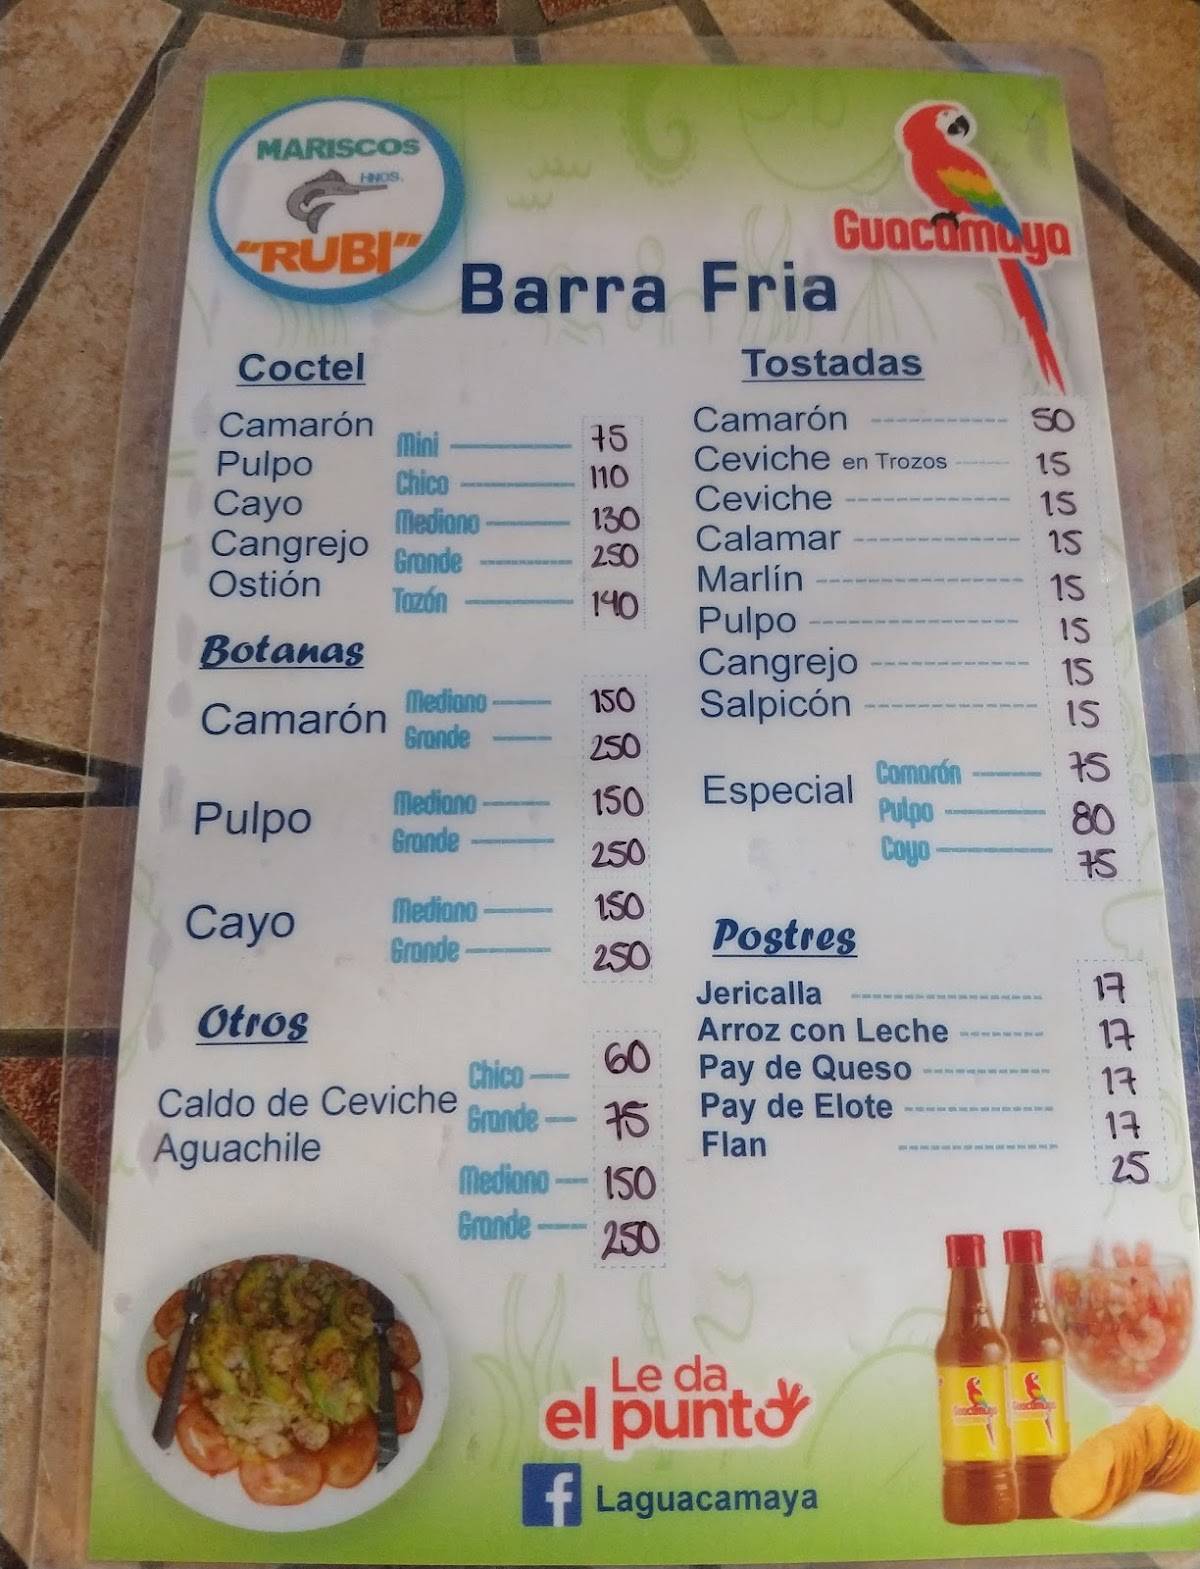 Menu at Mariscos Rubi restaurant, Guadalajara